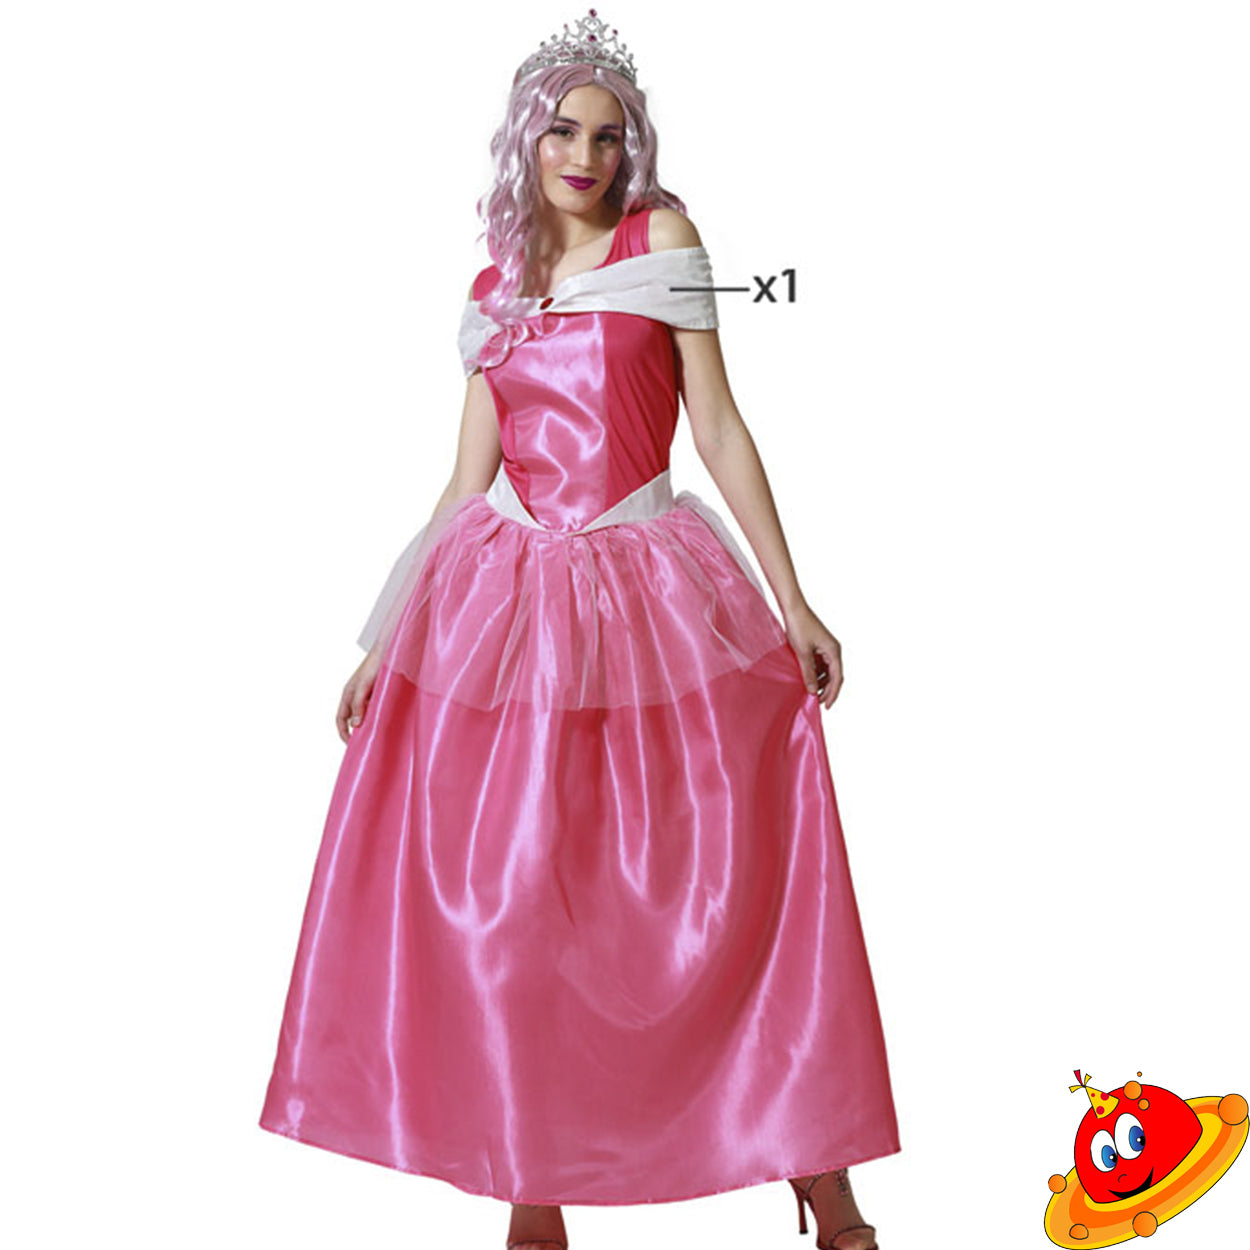 Costume donna Principessa Rosa Peach Tg 36/38